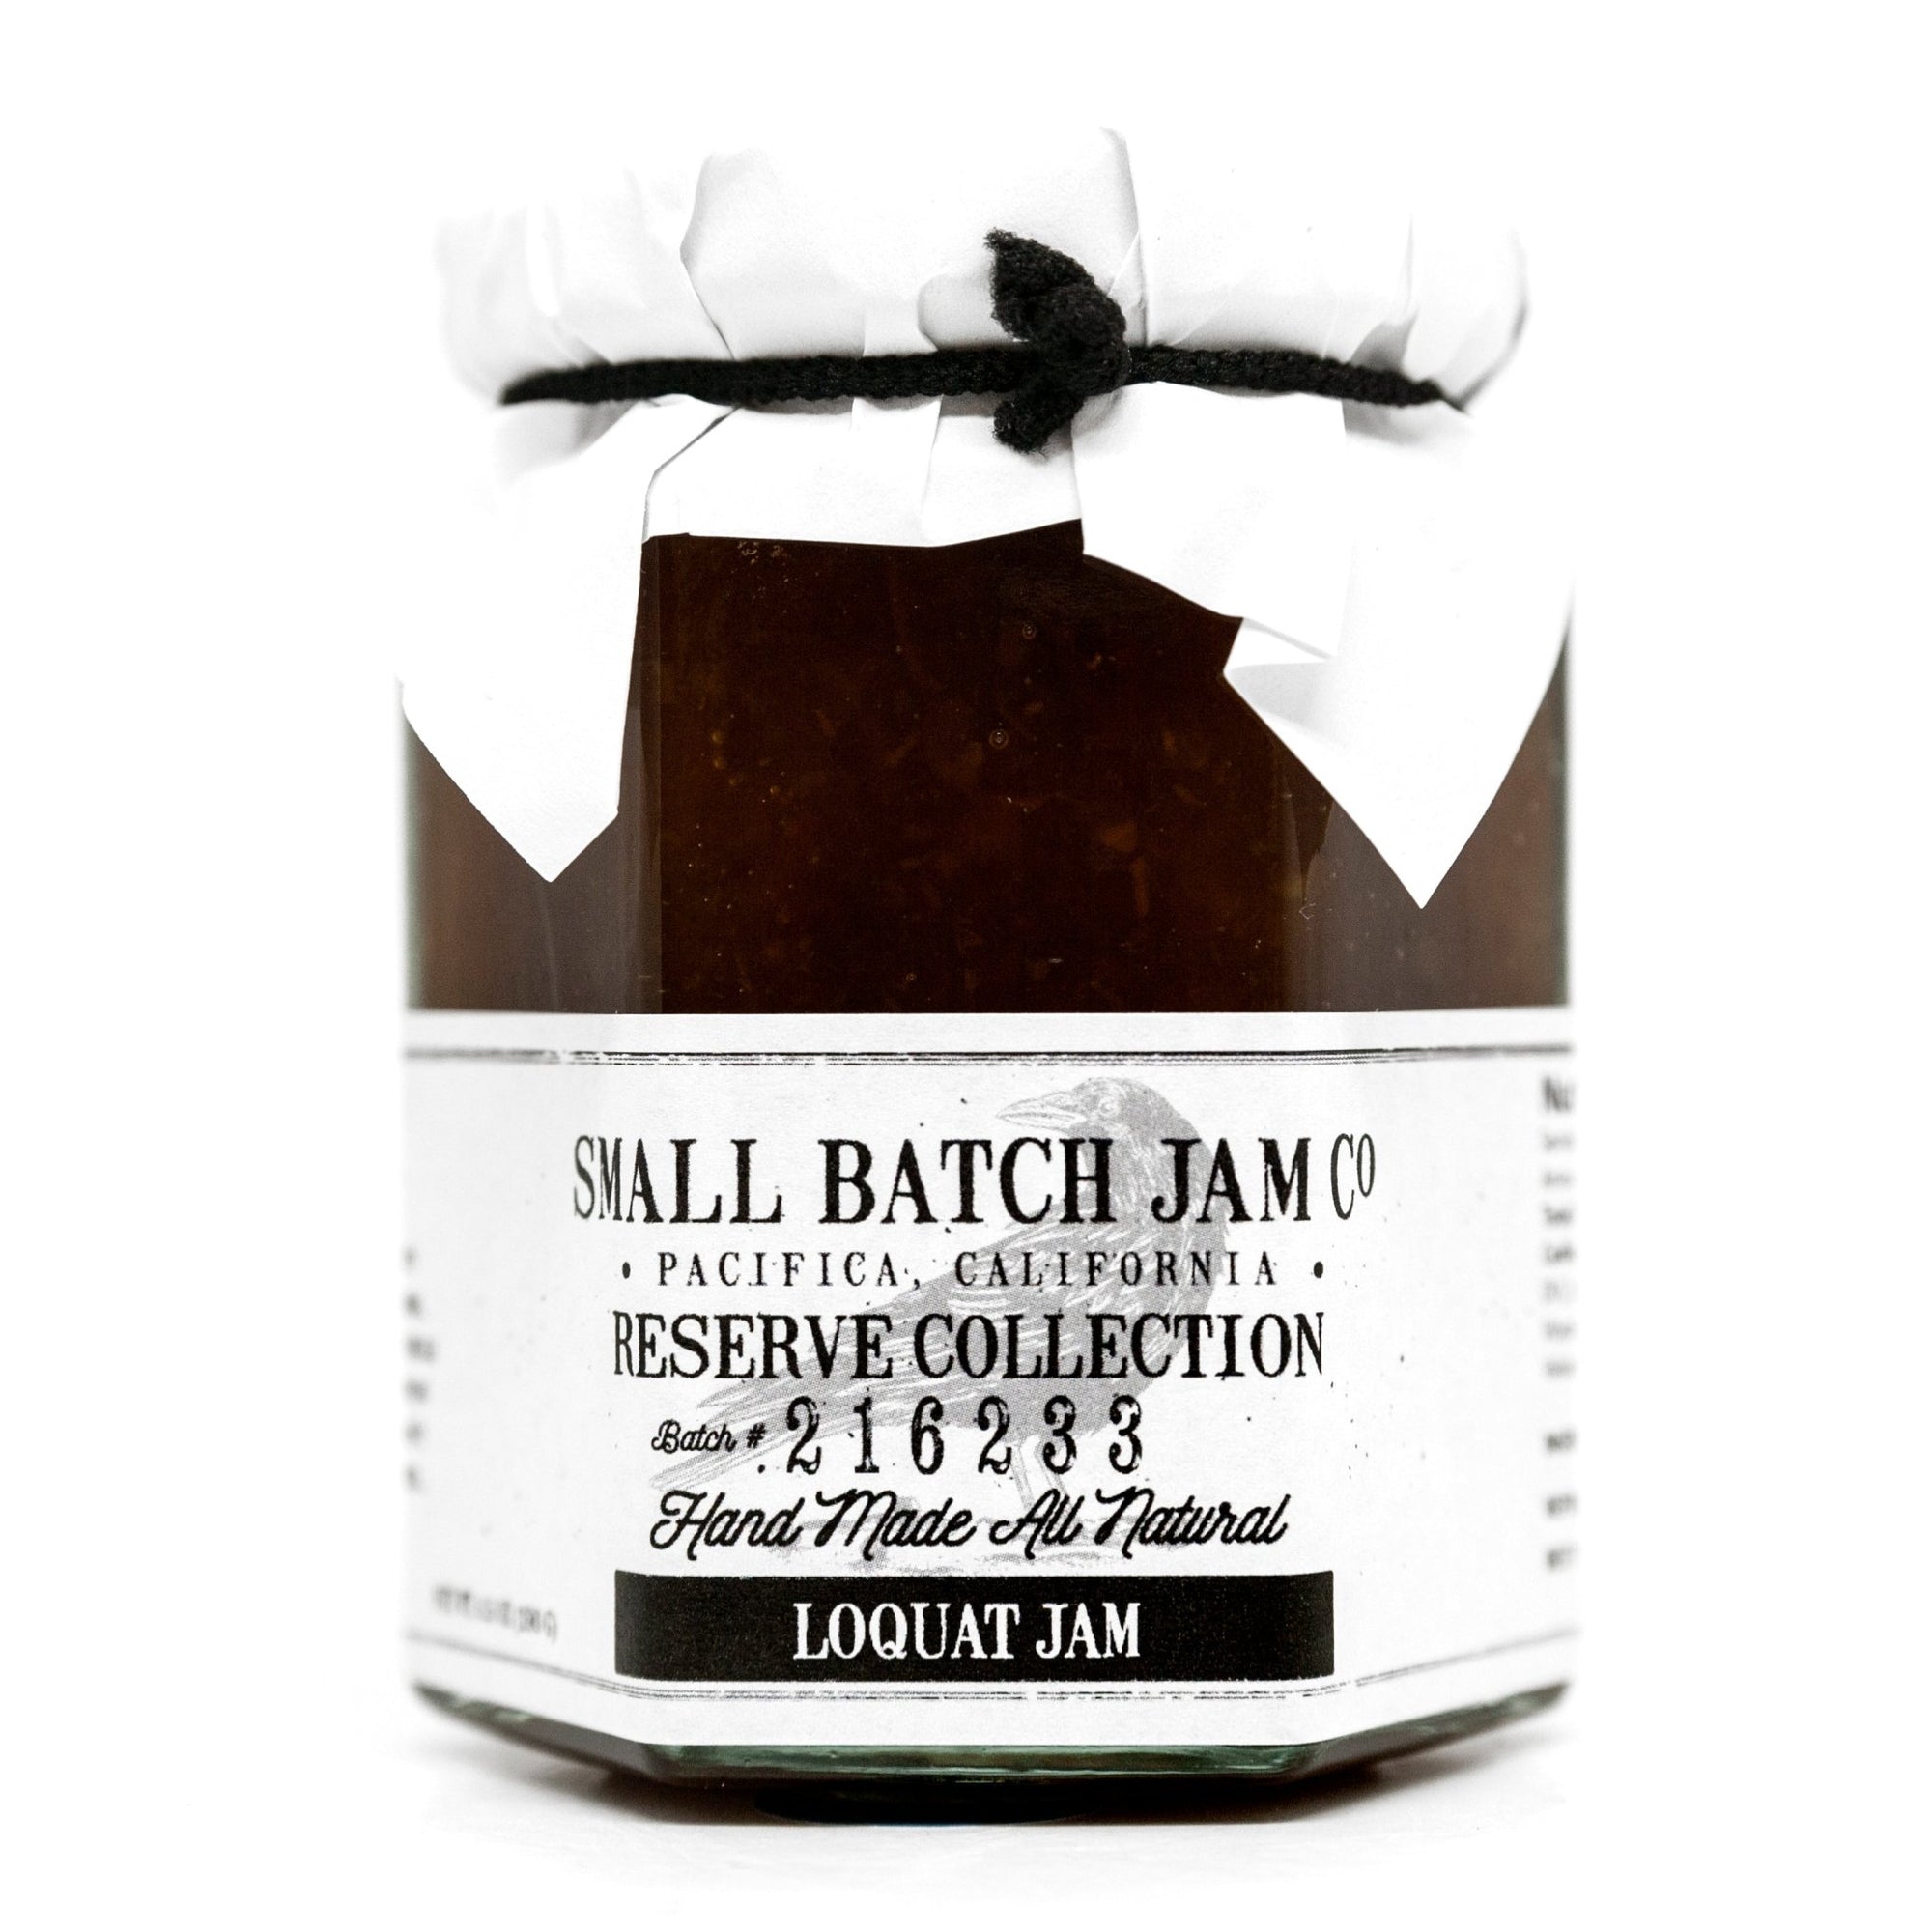 Loquat Jam - Reserve Collection - Small Batch Jam Co